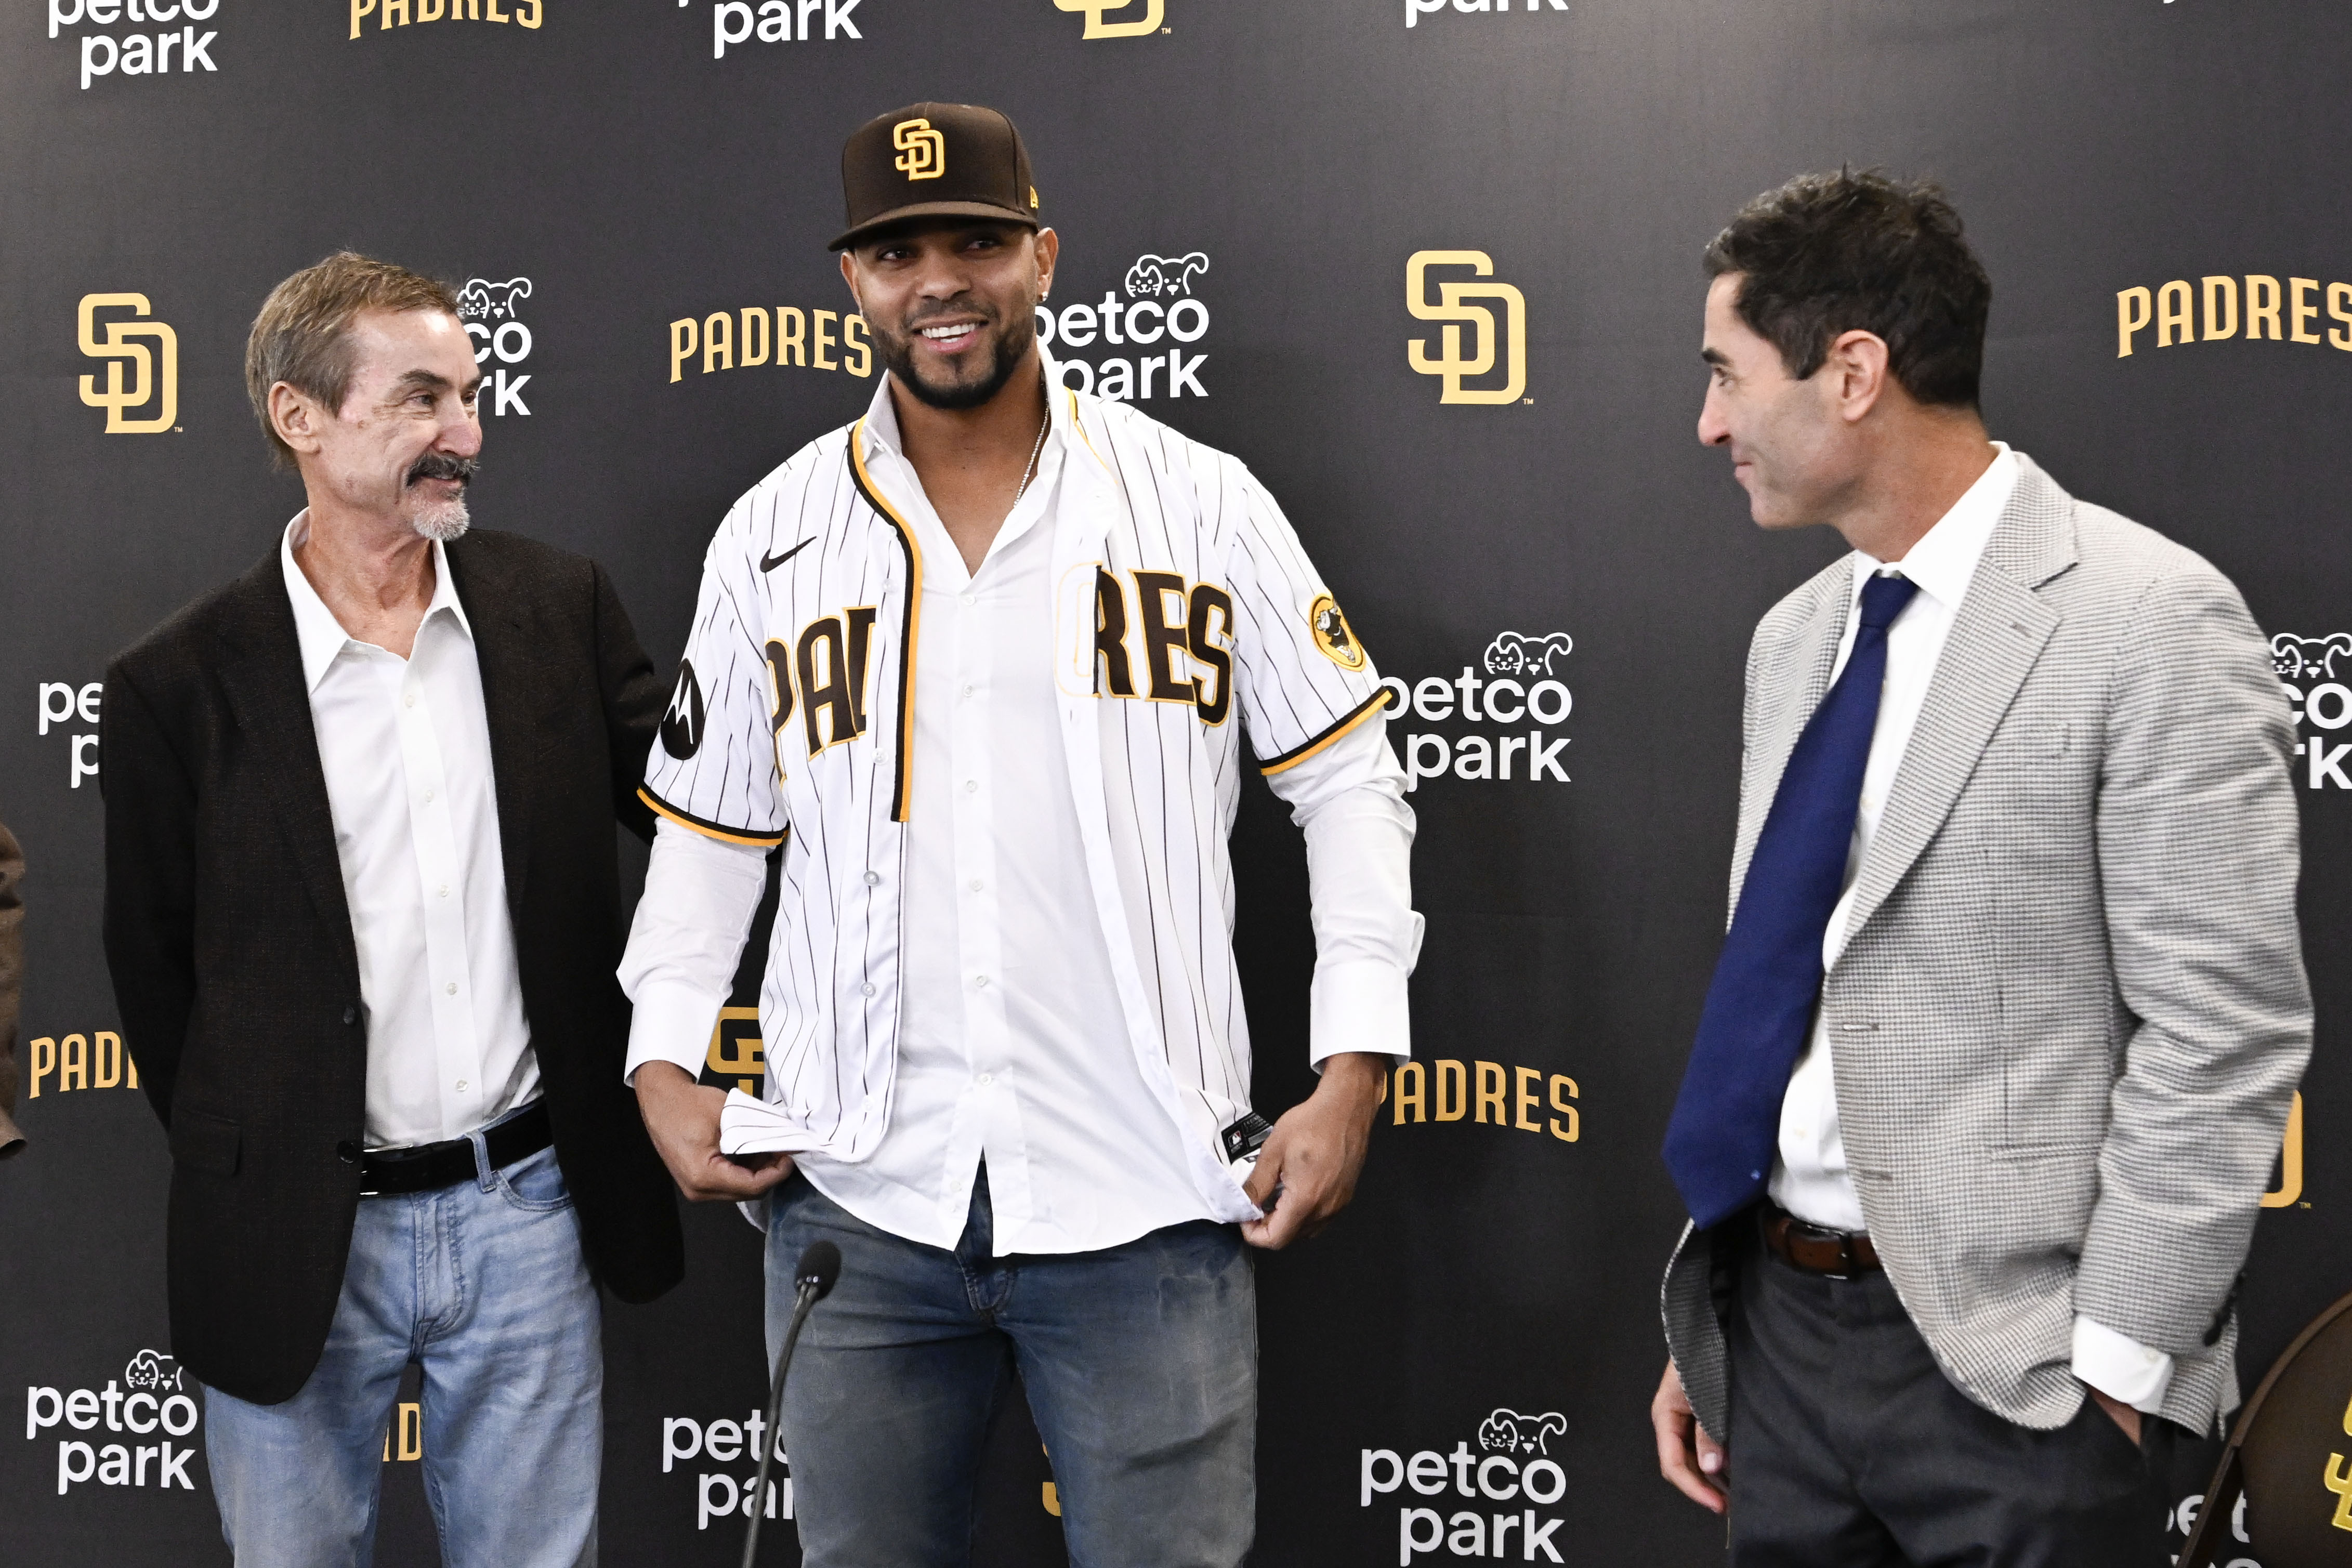 Details emerge on Xander Bogaerts' $280 million megadeal with Padres